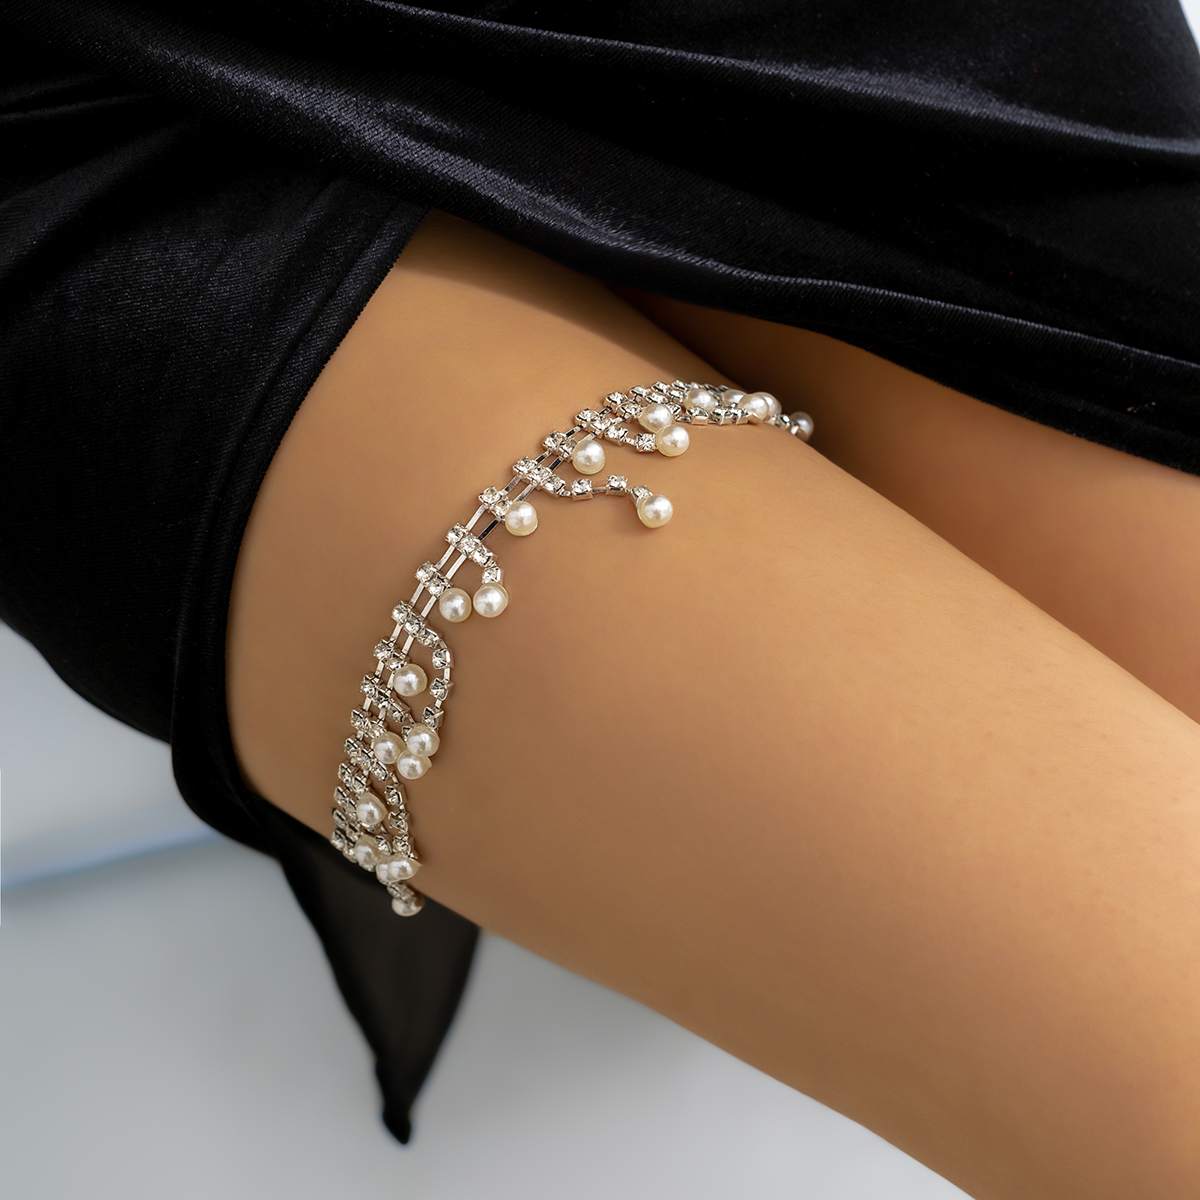 Faux Pearl Decor Thigh Chain  Thigh chain, Thigh chain jewelry, Thigh  jewelry